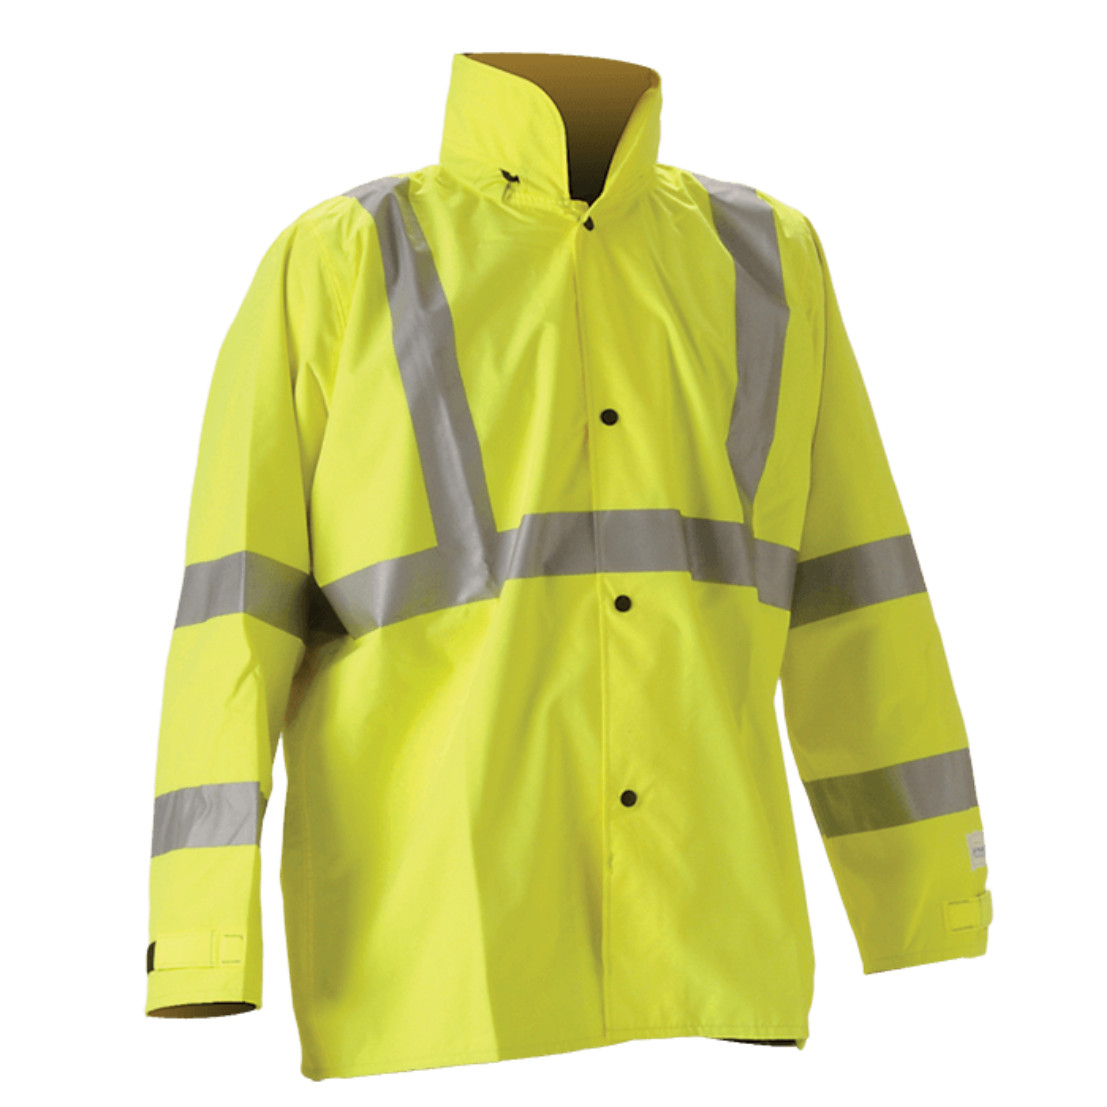 Envisage Hi-Vis Rain Jacket in Hi-Vis Yellow